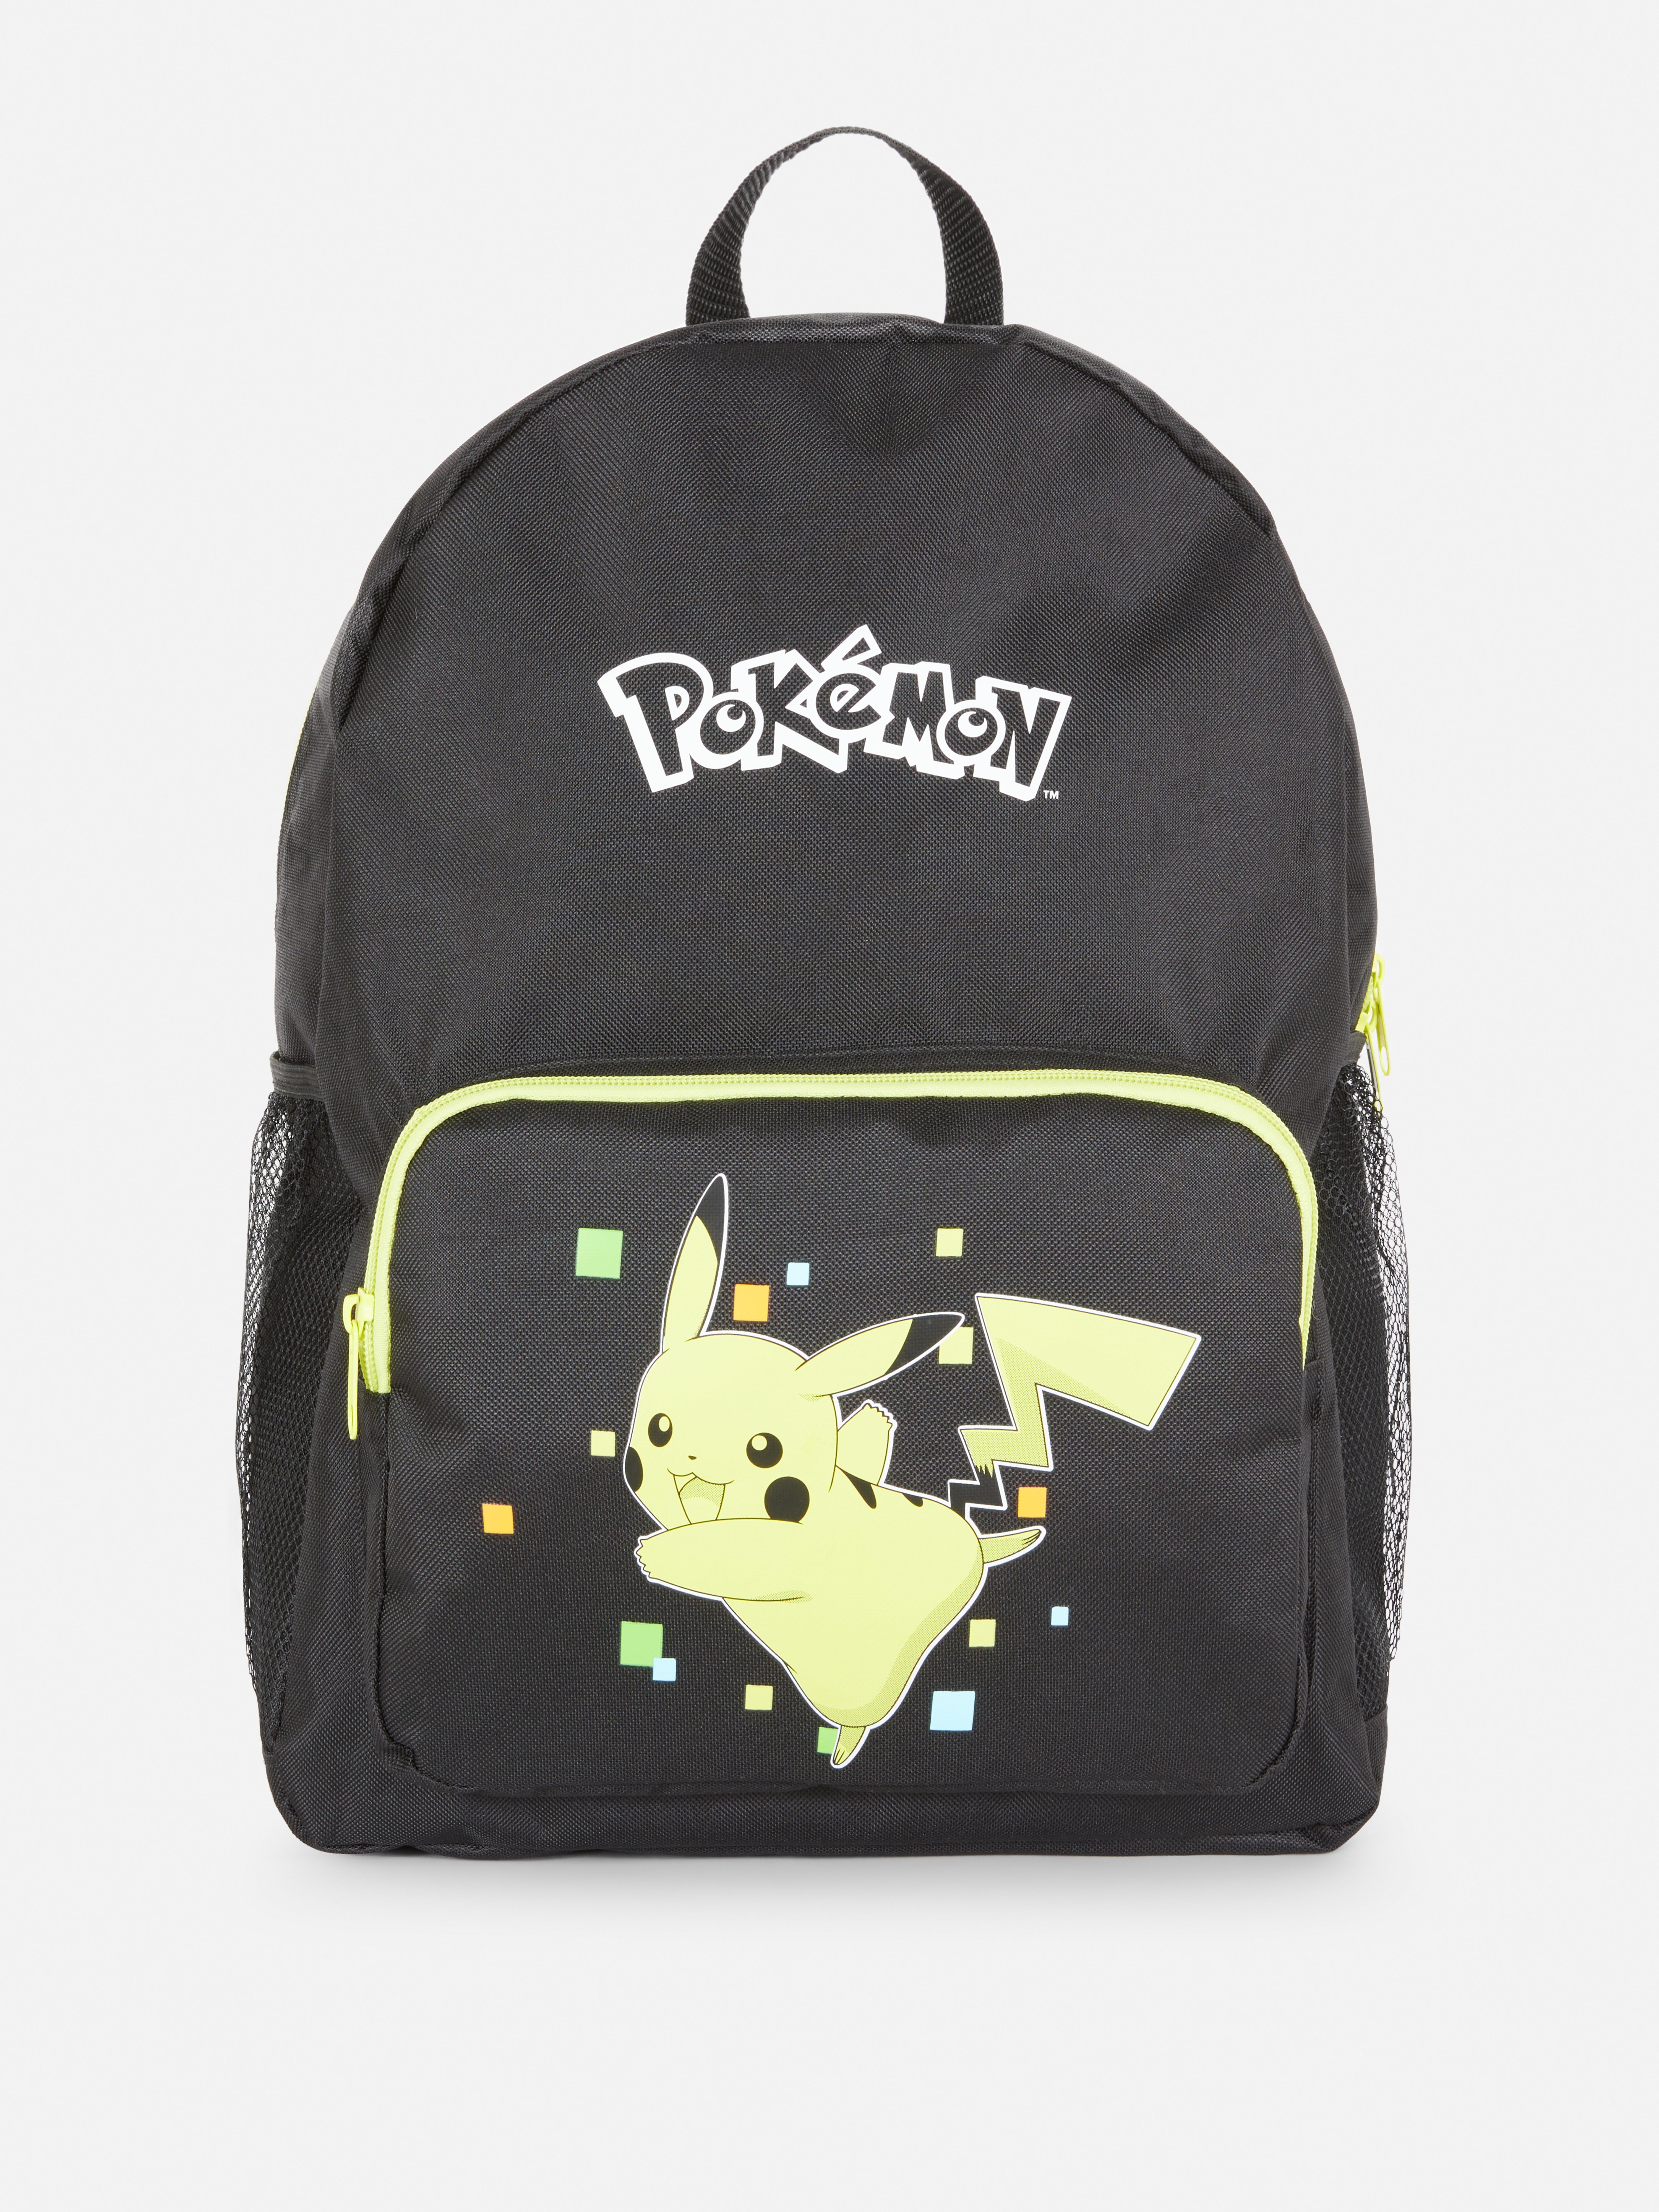 Pokémon Print Backpack Black